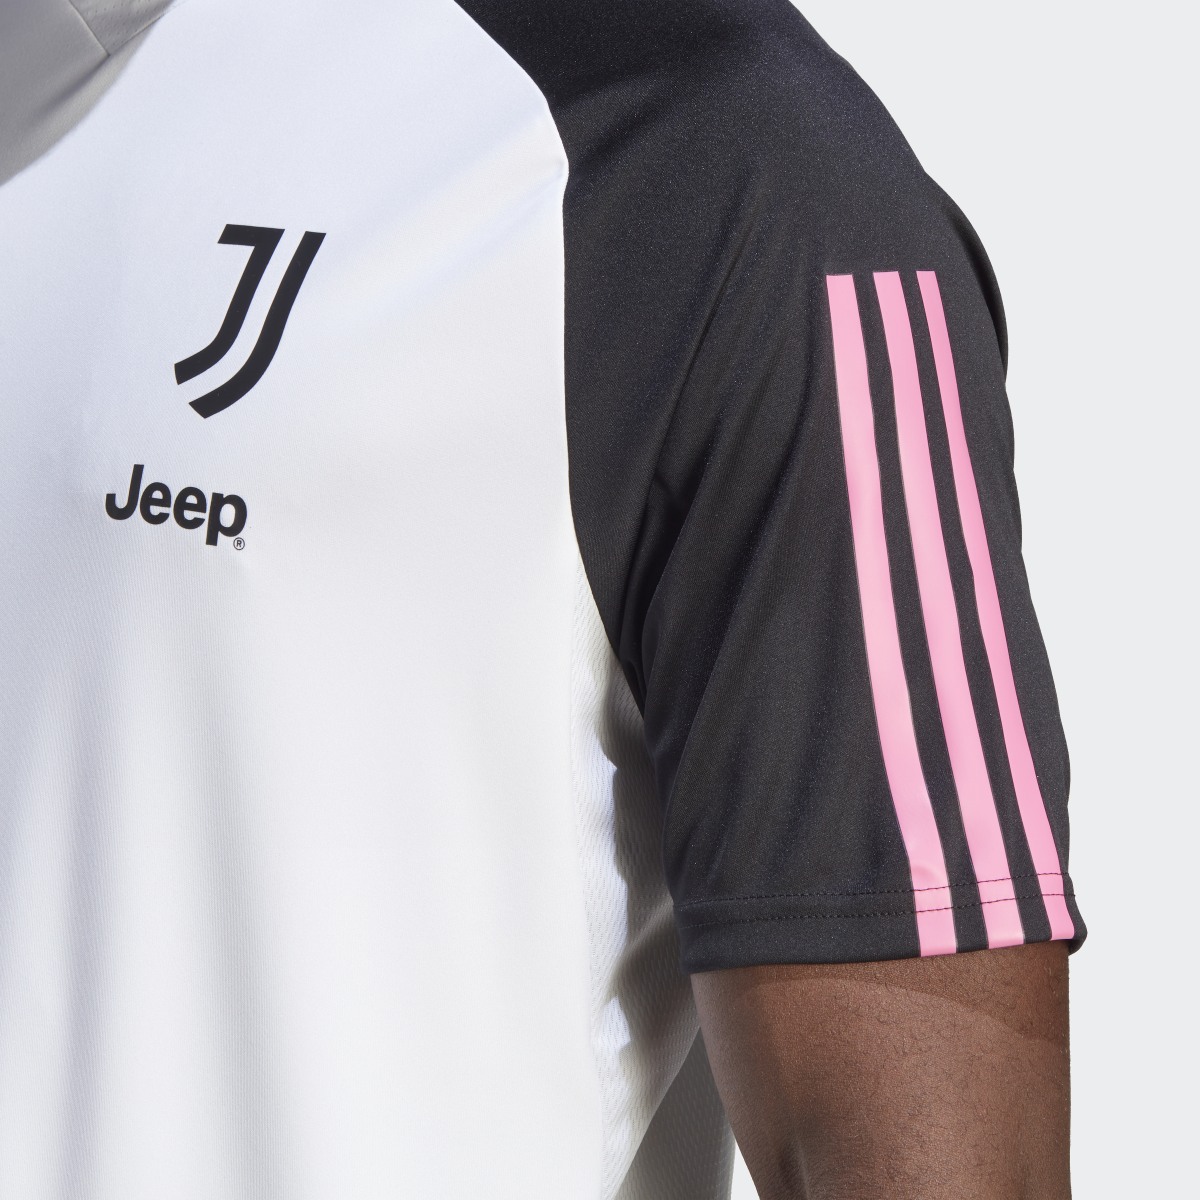 Adidas Juventus Tiro 23 Training Jersey. 8